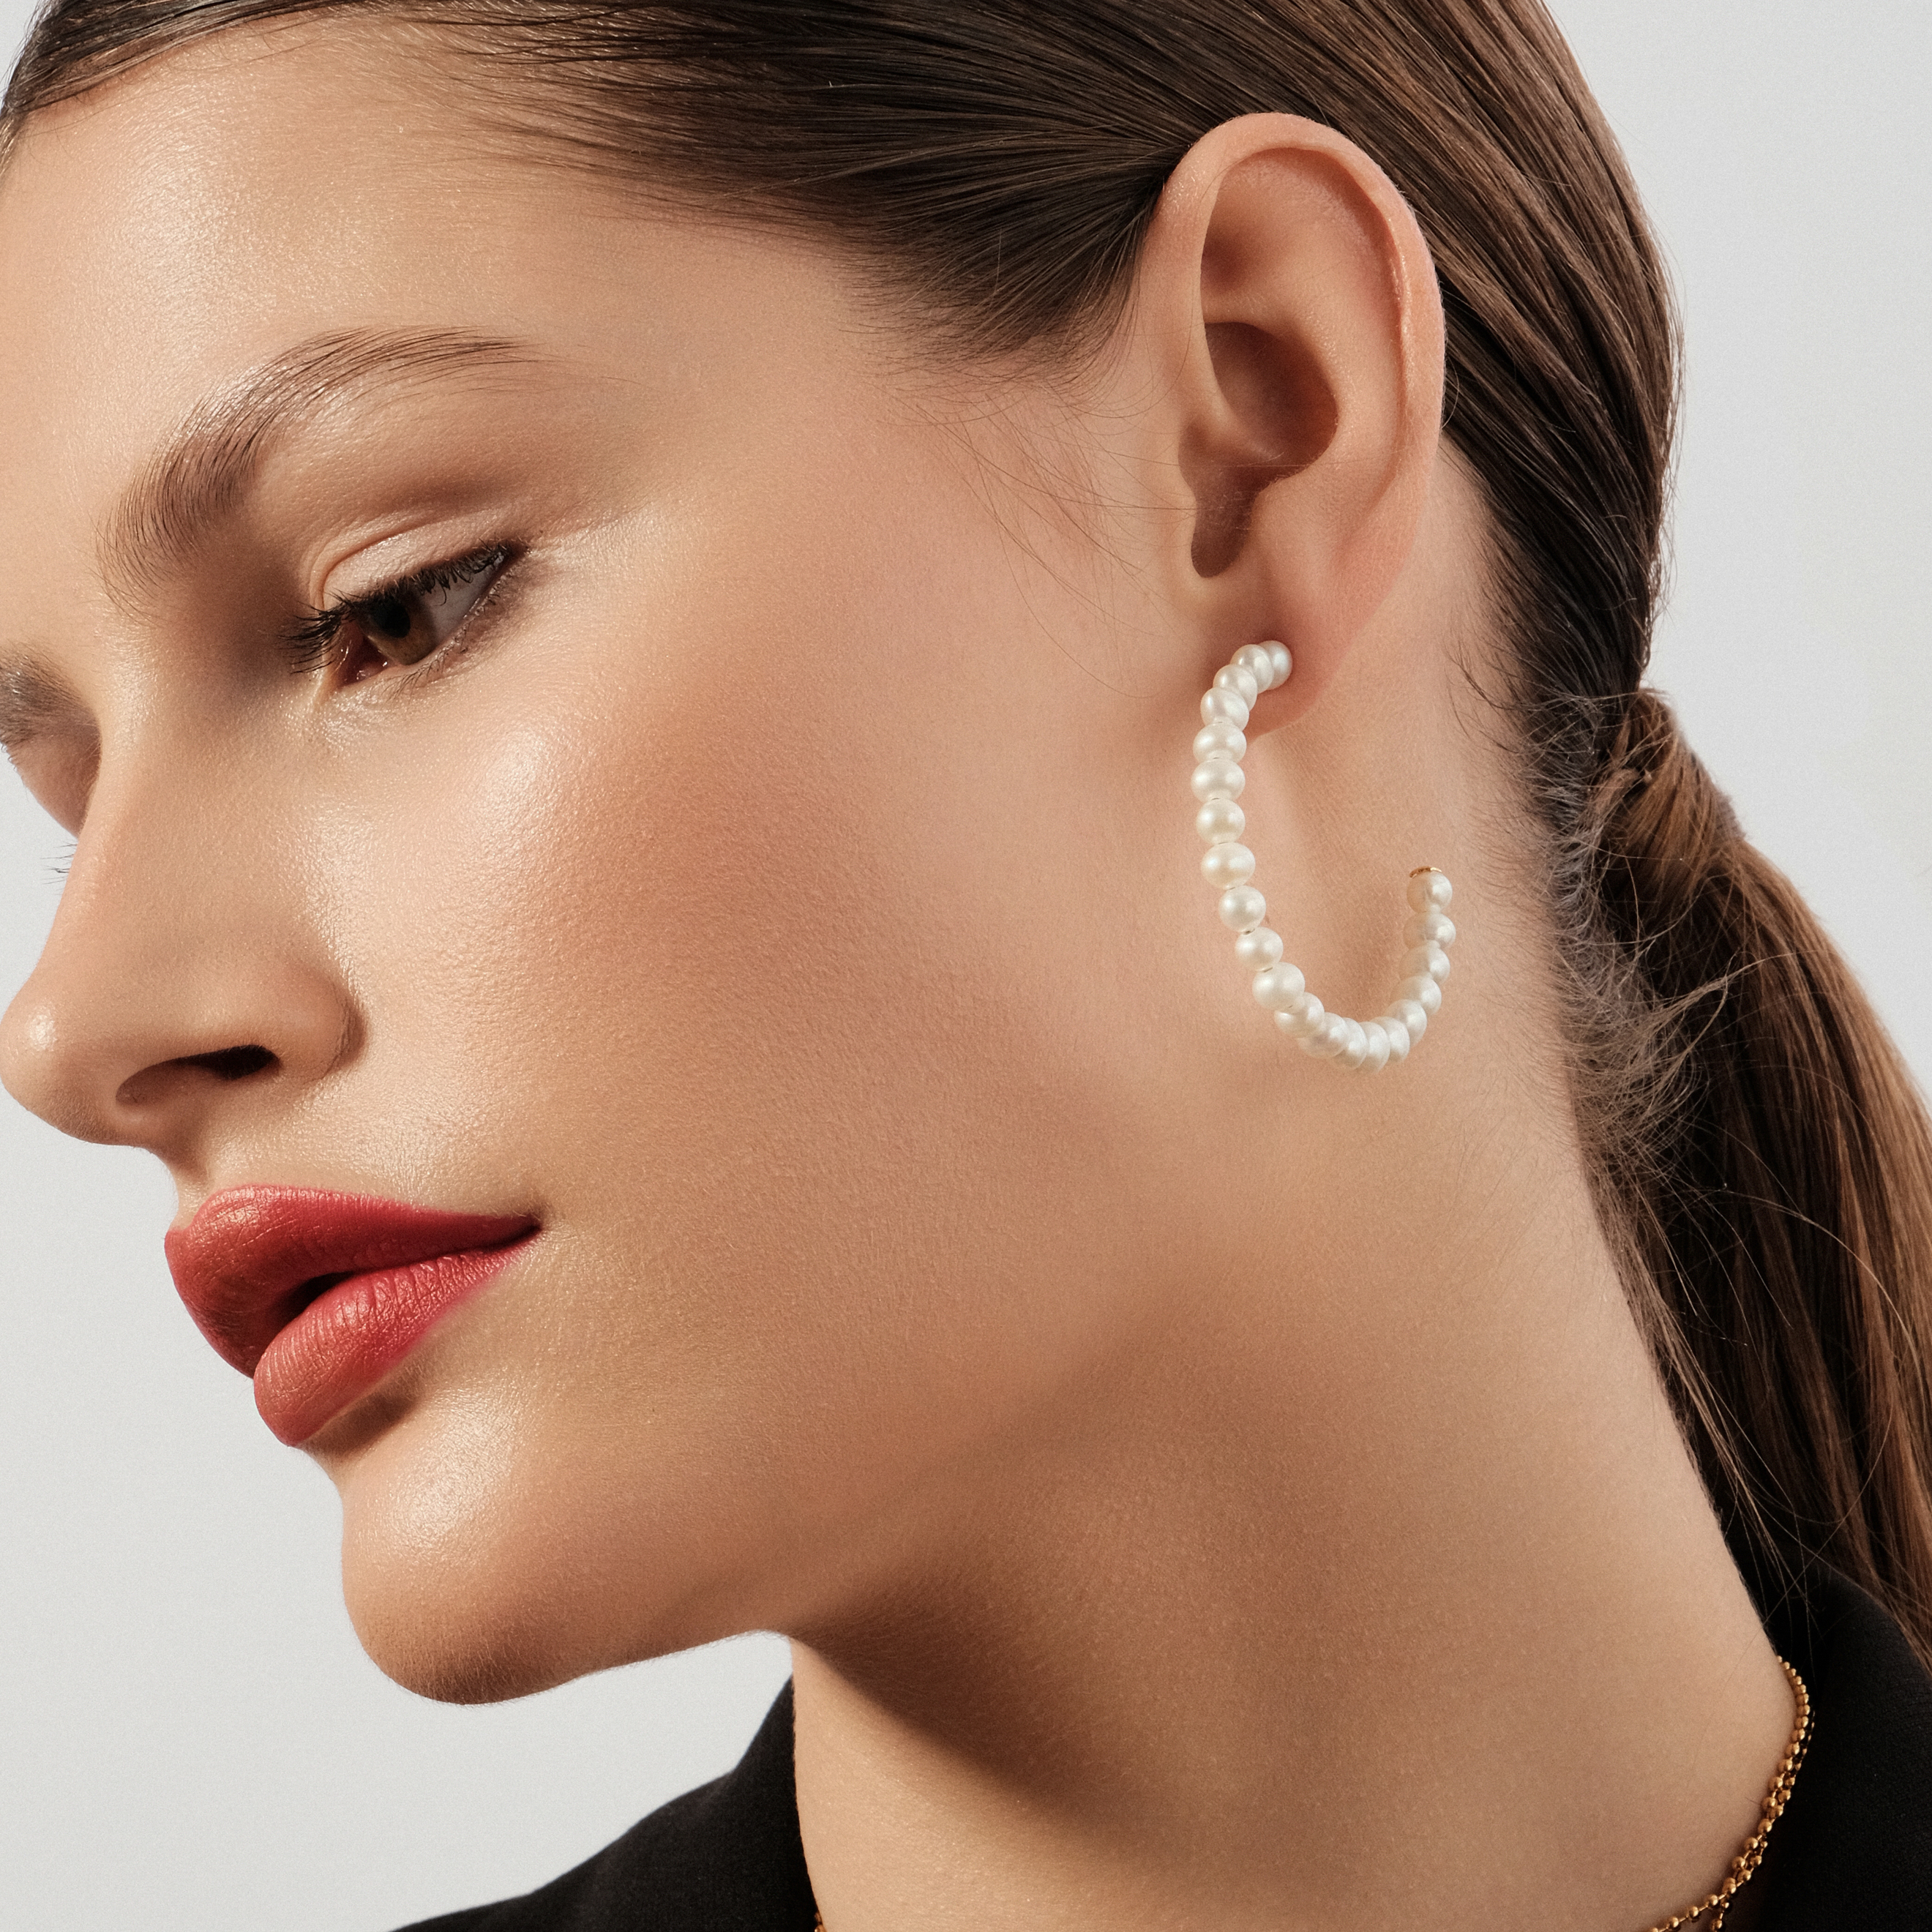 Gloss Hoop Earrings with Pearls – buy at Poison Drop online store, SKU